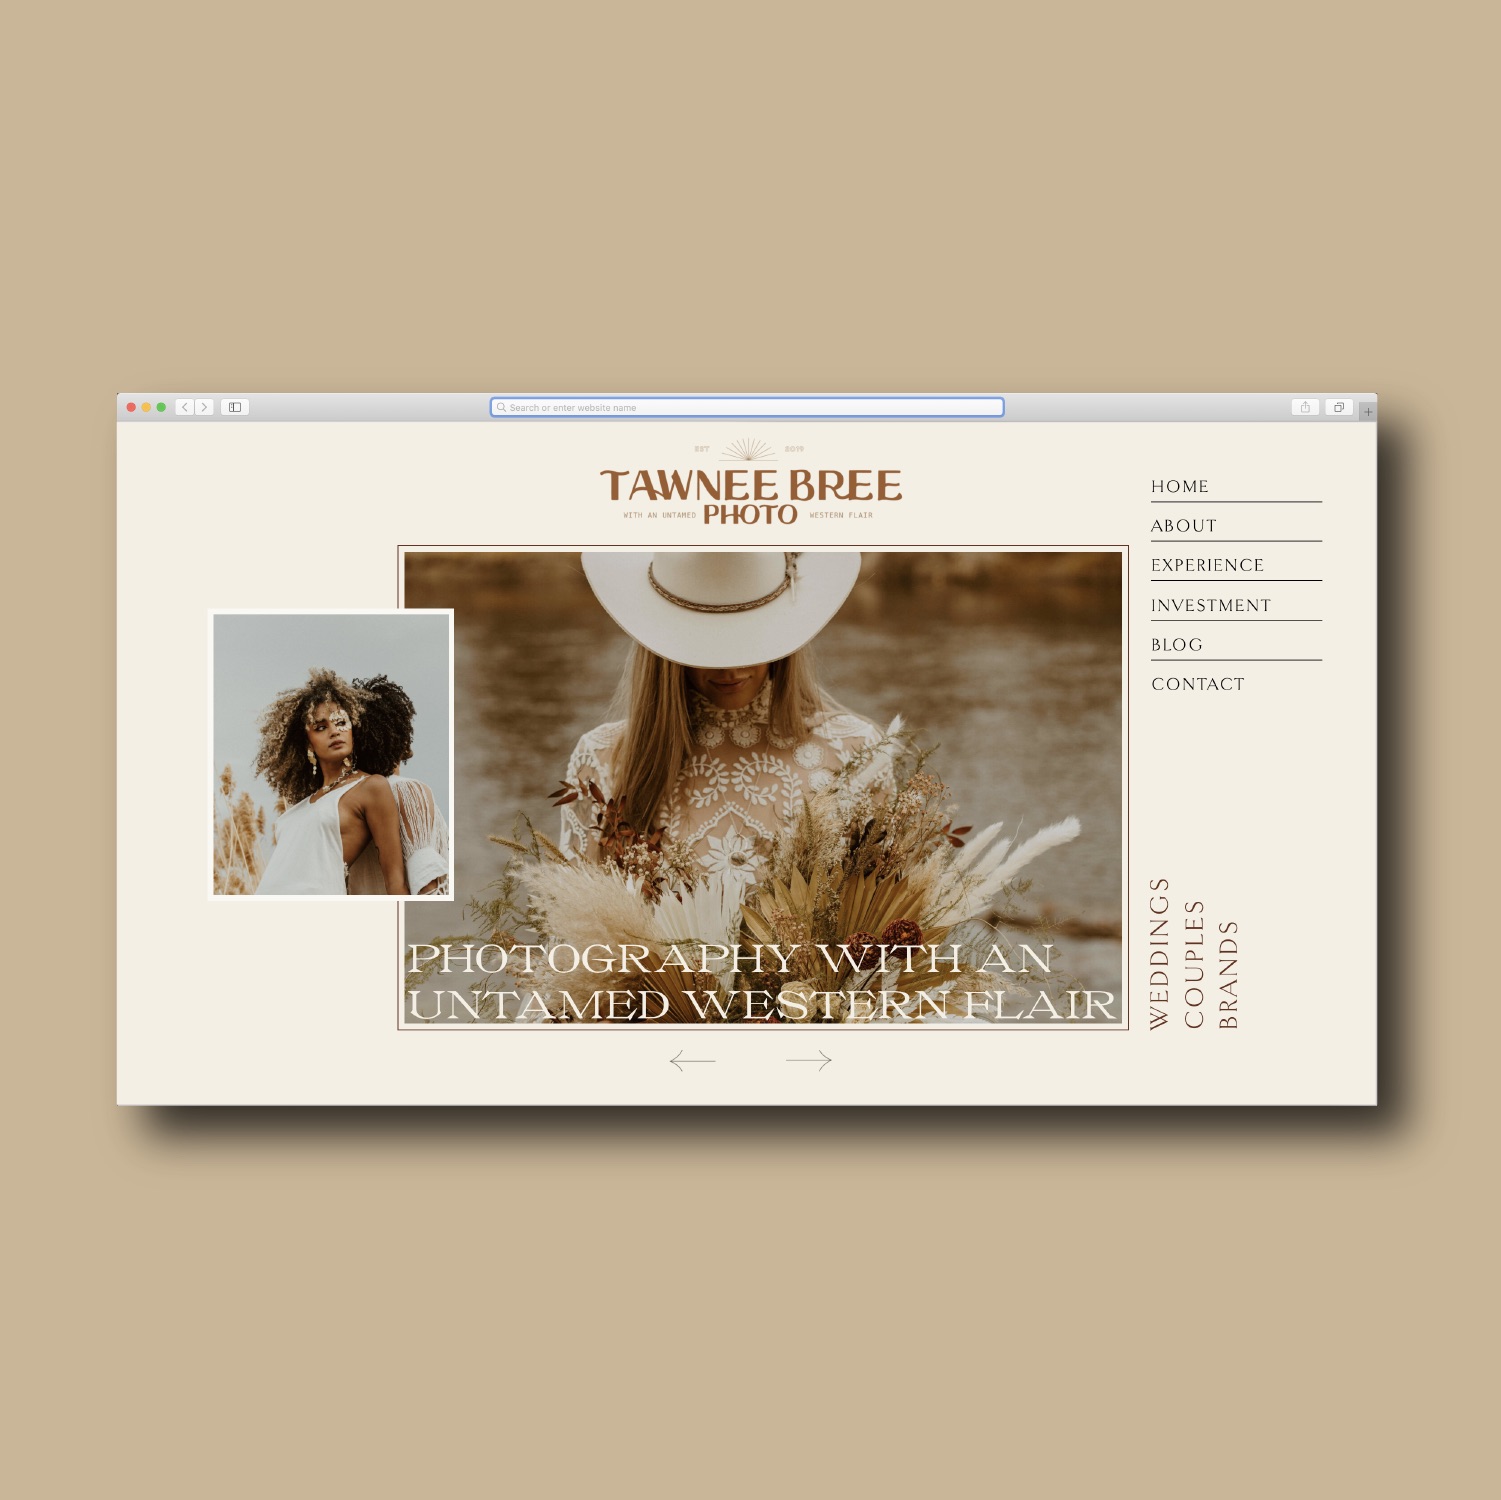 Website design for Tawnee Bree Photo